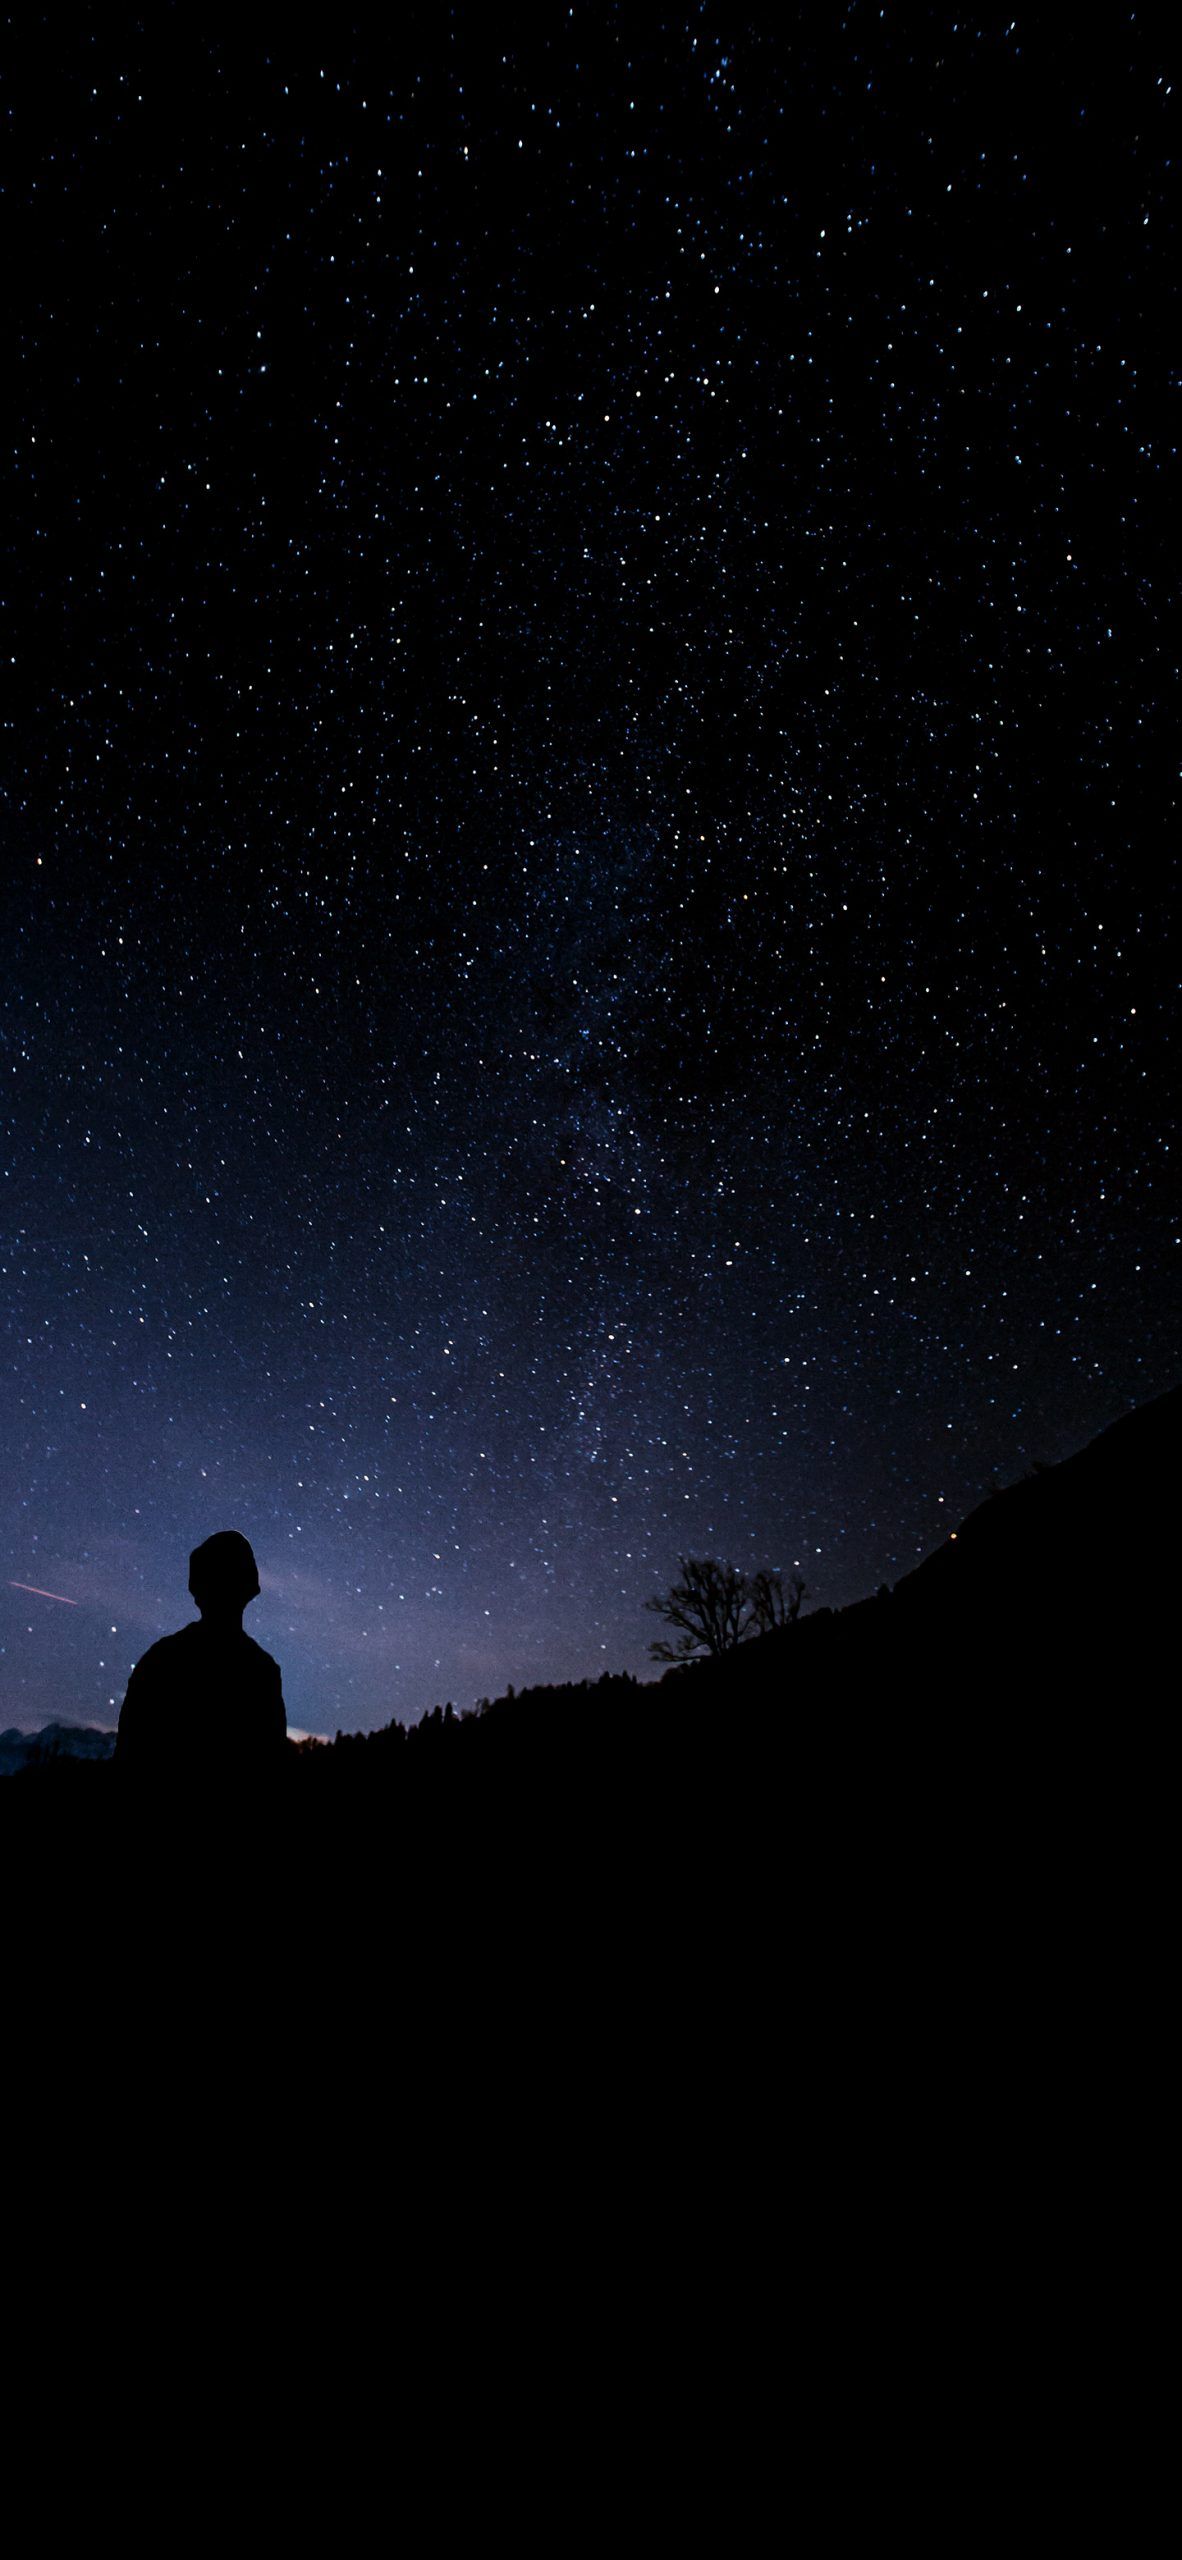 Man Looking At Stars. Night sky wallpaper, Wallpaper, Night skies